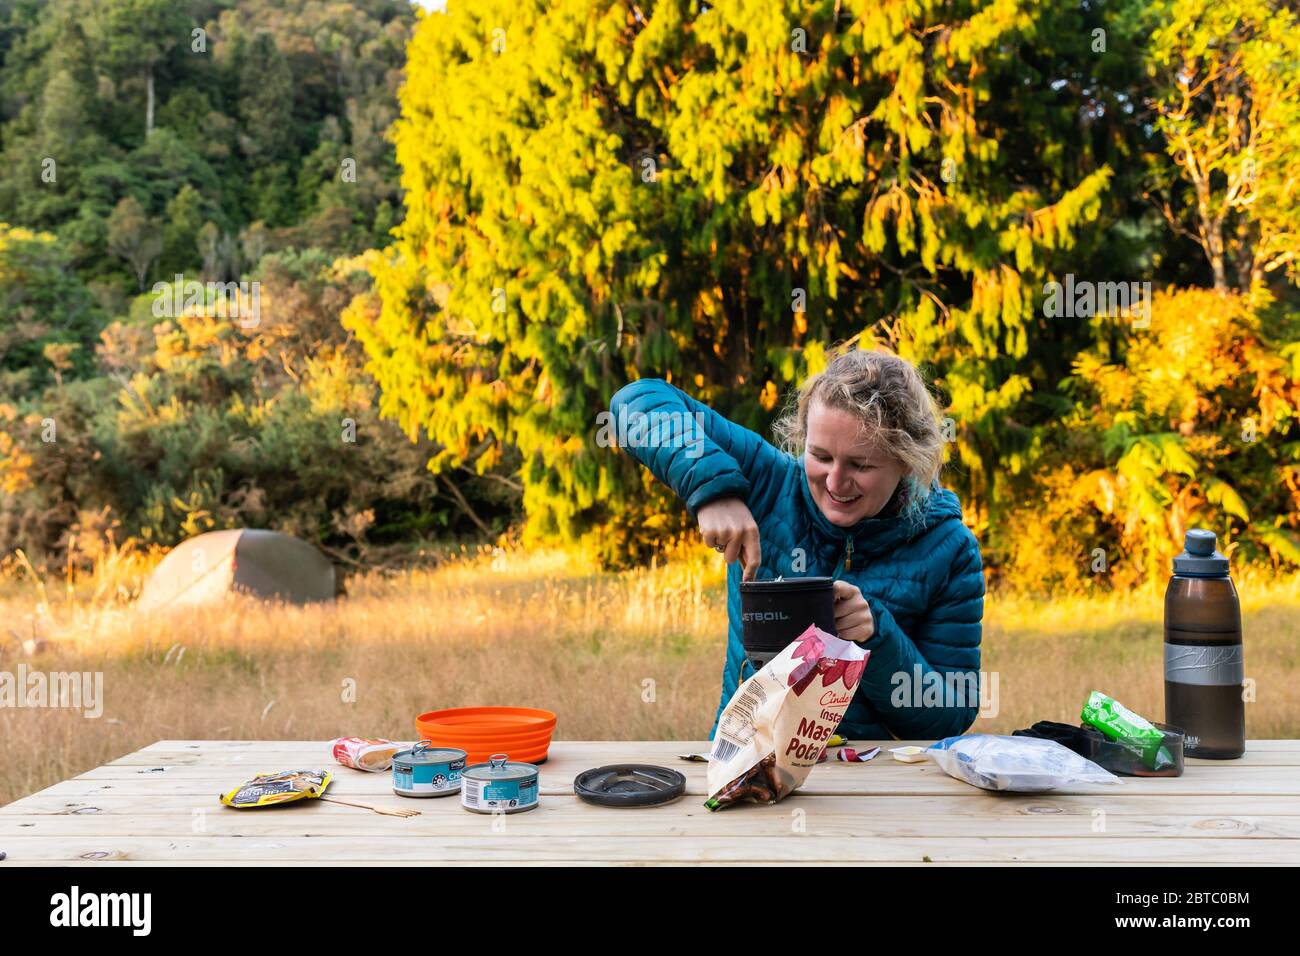 A camper preparing a meal, Tararua Ranges, New Zealand, February 2020 Stock Photo